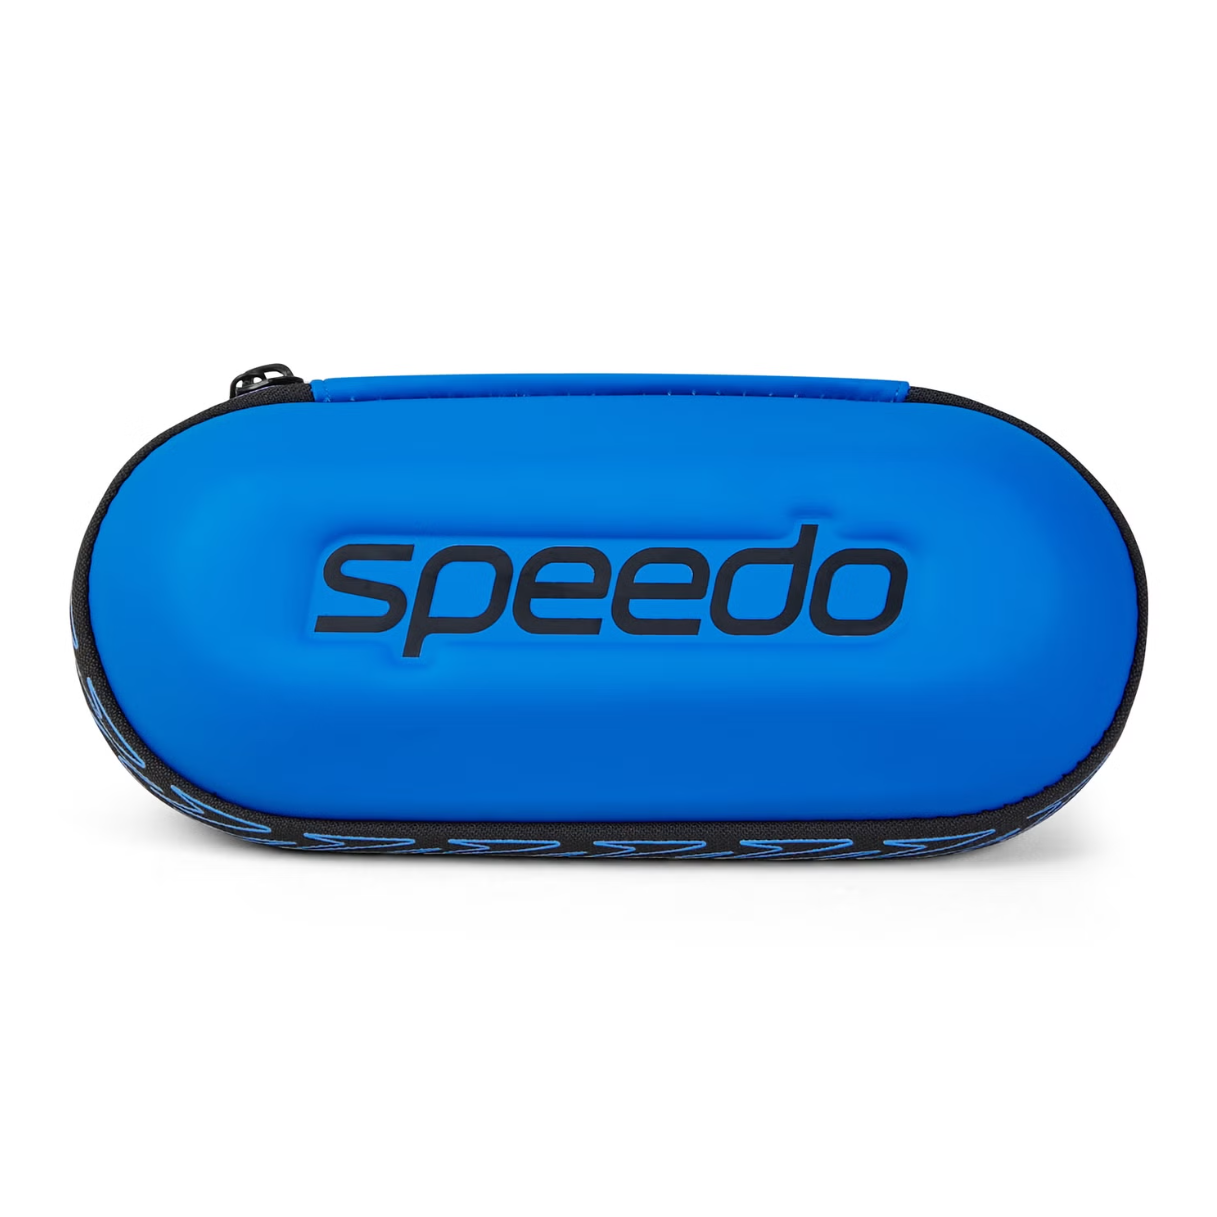 Speedo Goggles Storage Case